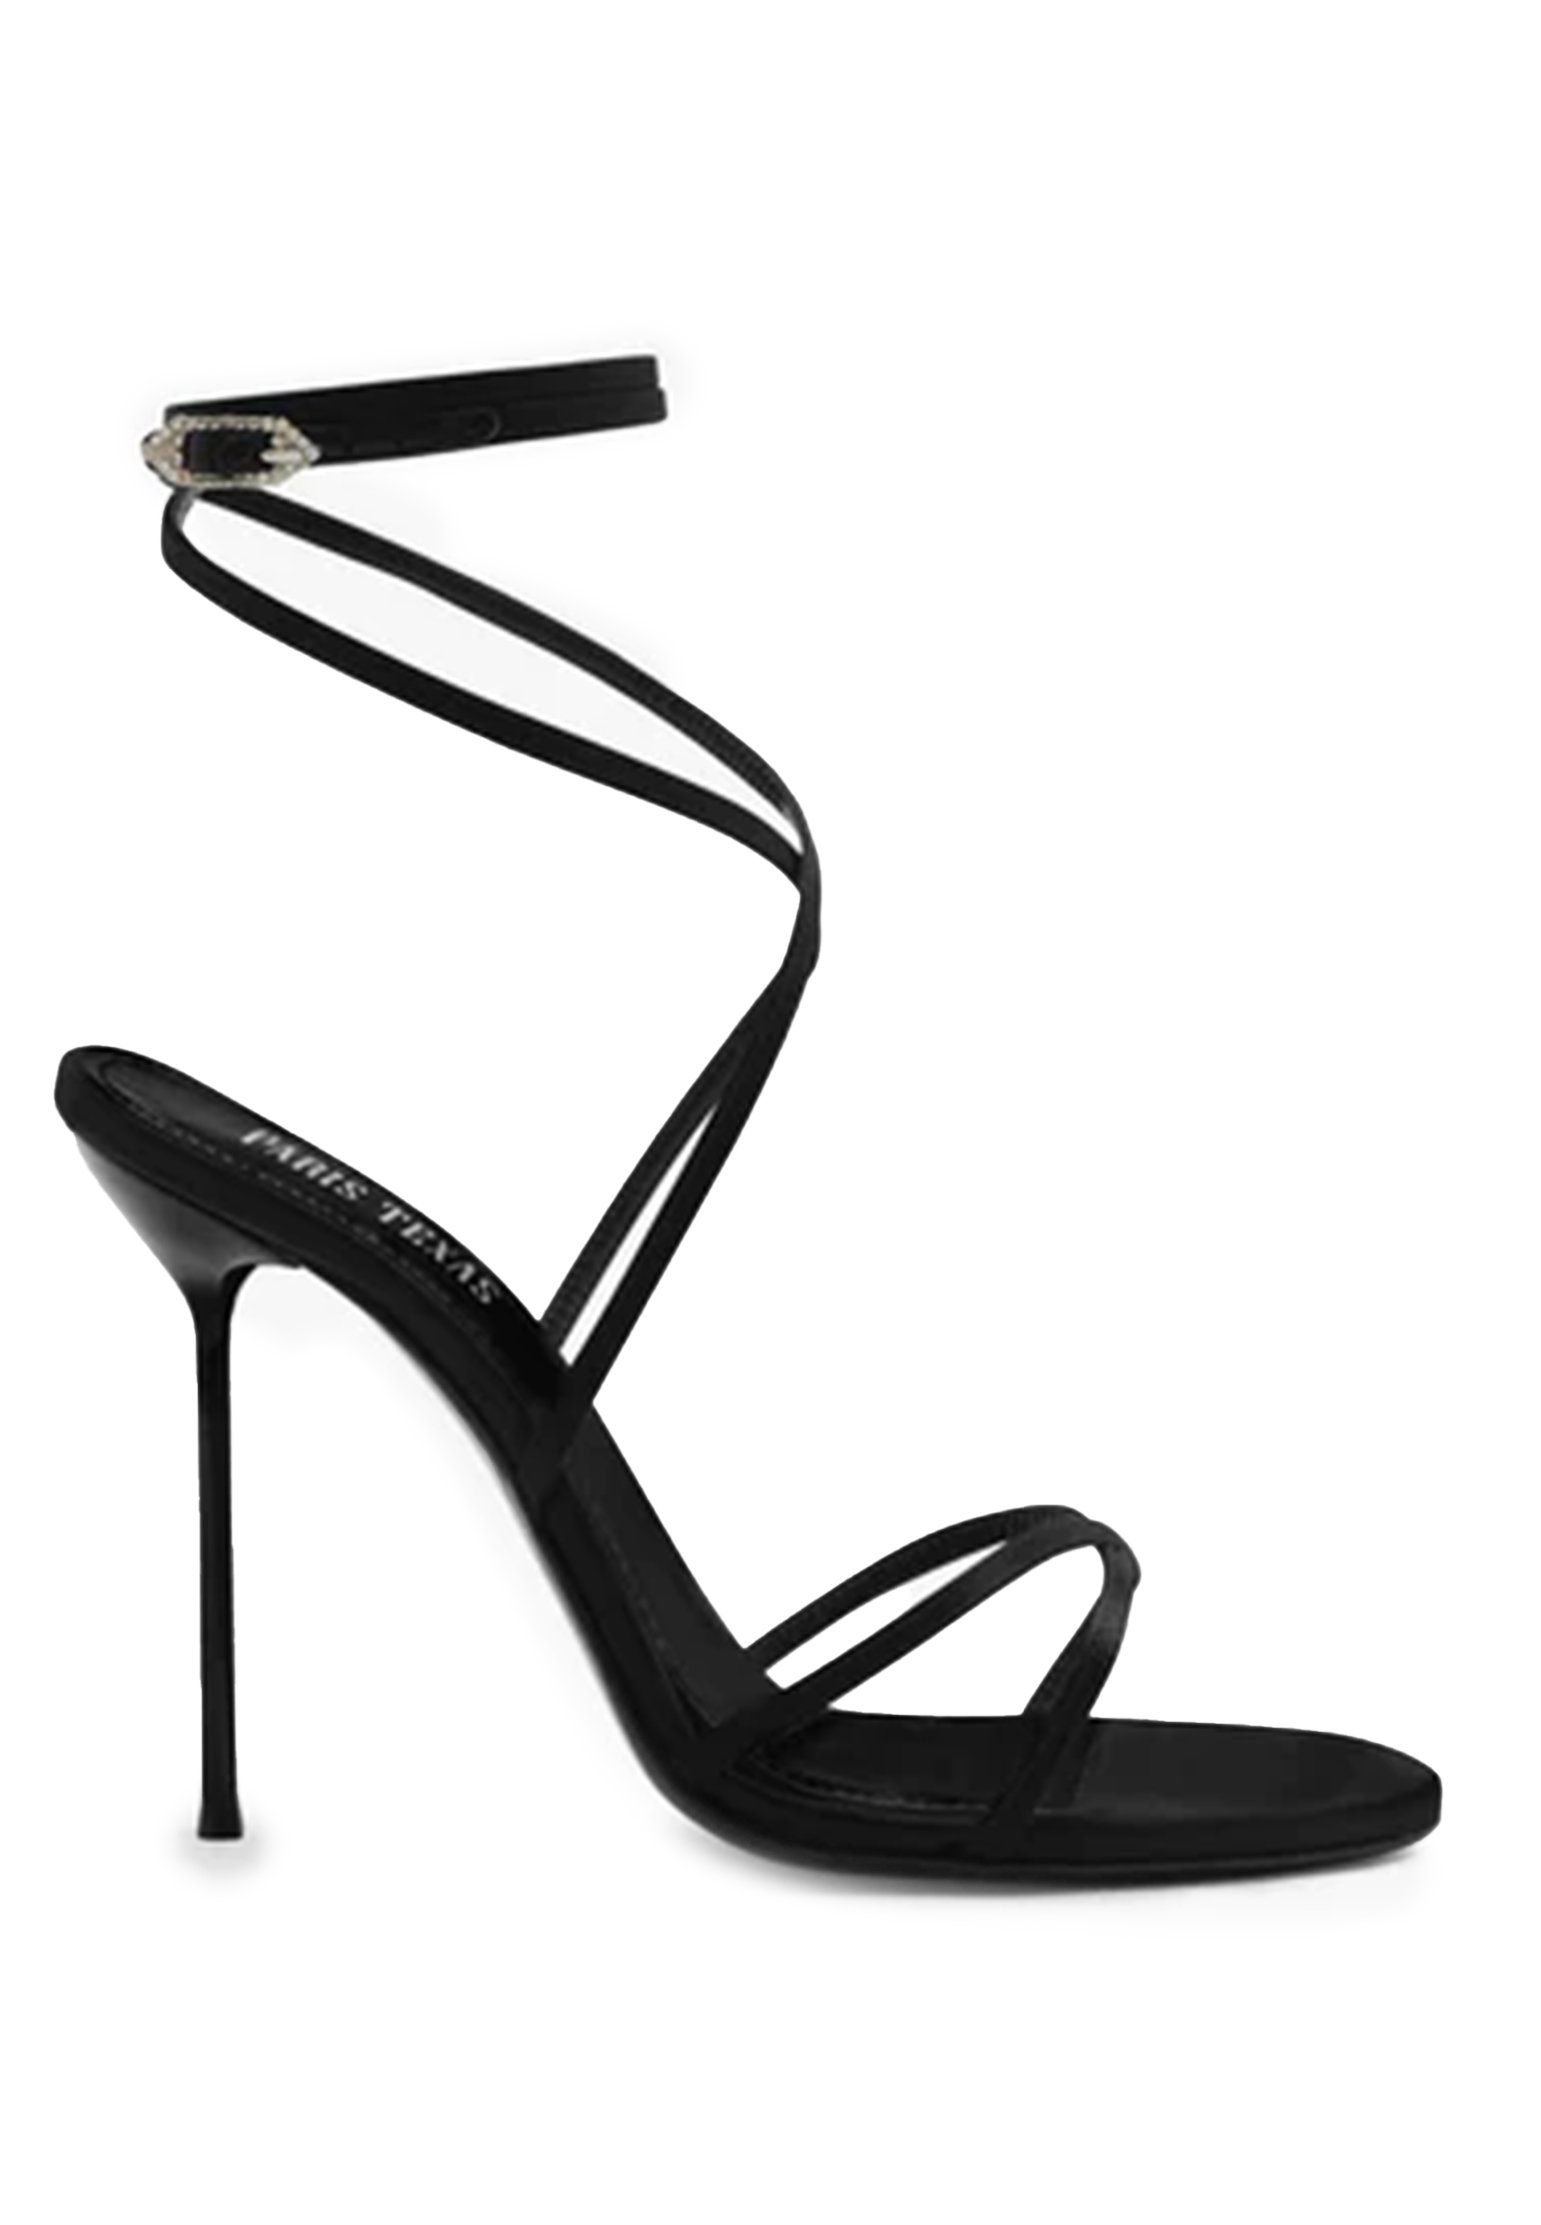 Sandal PARIS TEXAS Color: black (Code: 3916) in online store Allure